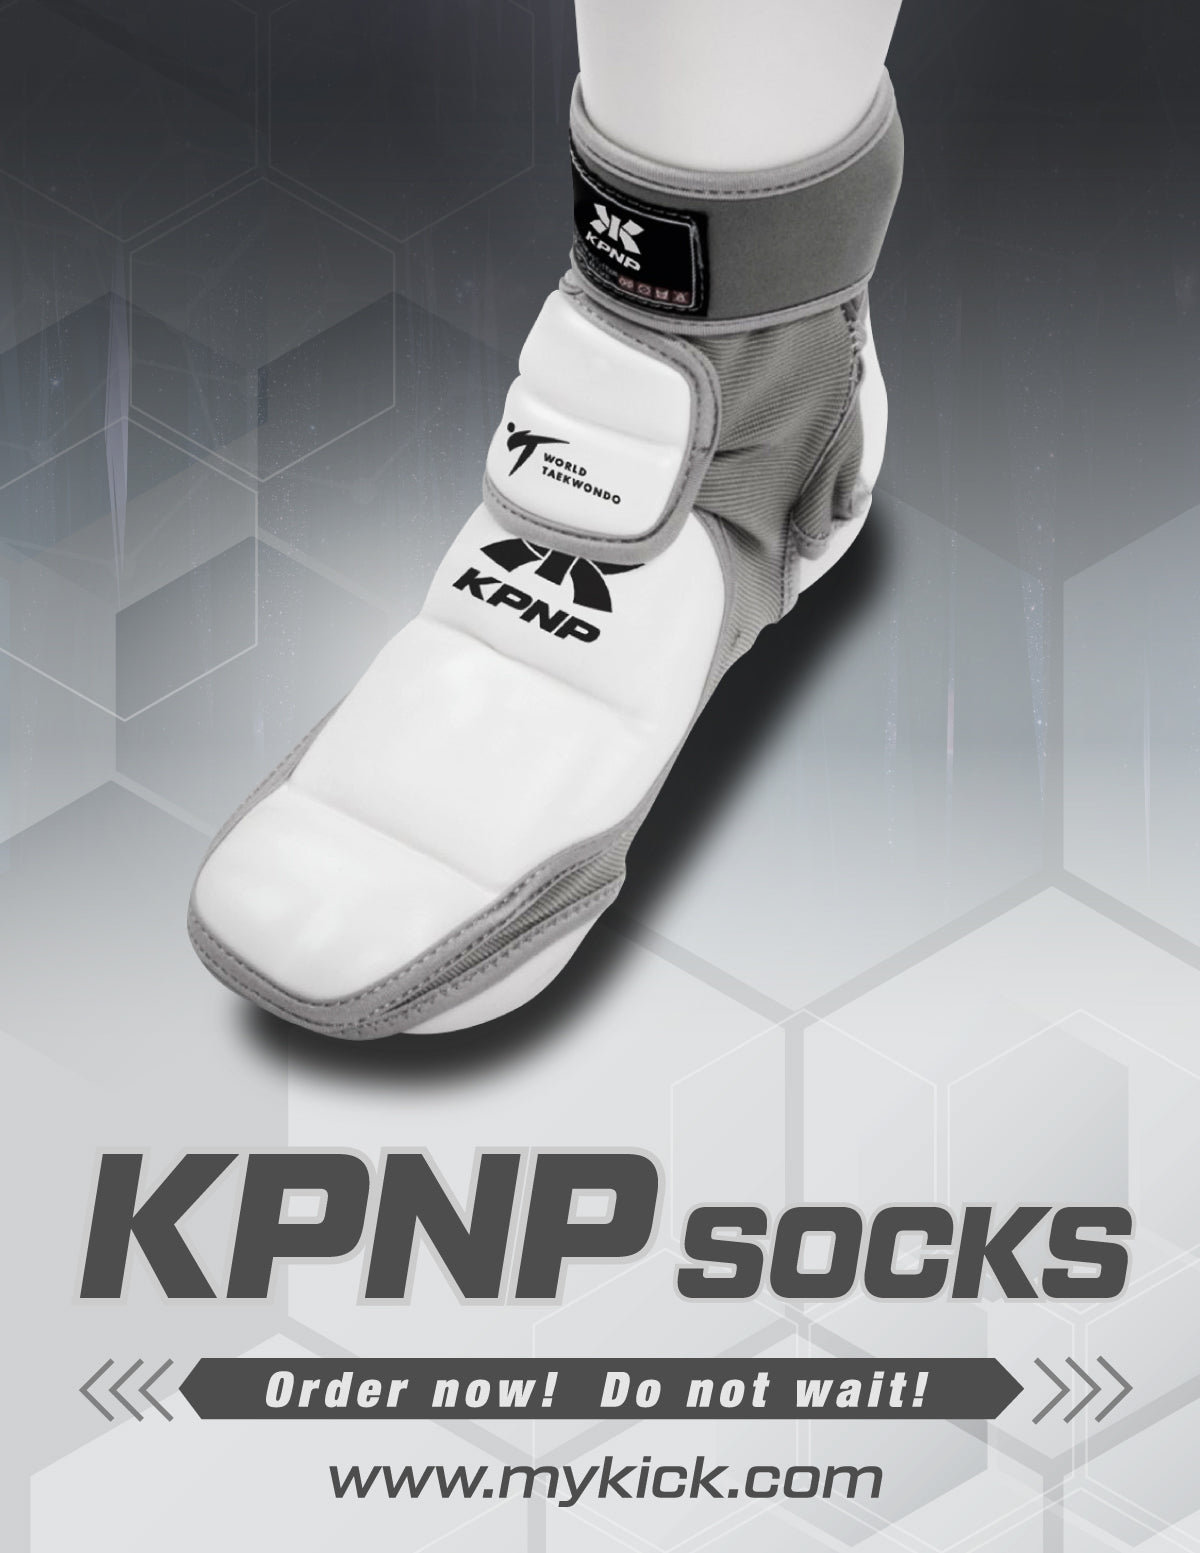 Promo E foot Taekwondo Socks Foot Gloves KPNP Sensor PSS Protector Scoring  Diskon 23% di Seller aaron - Gandaria Utara, Kota Jakarta Selatan